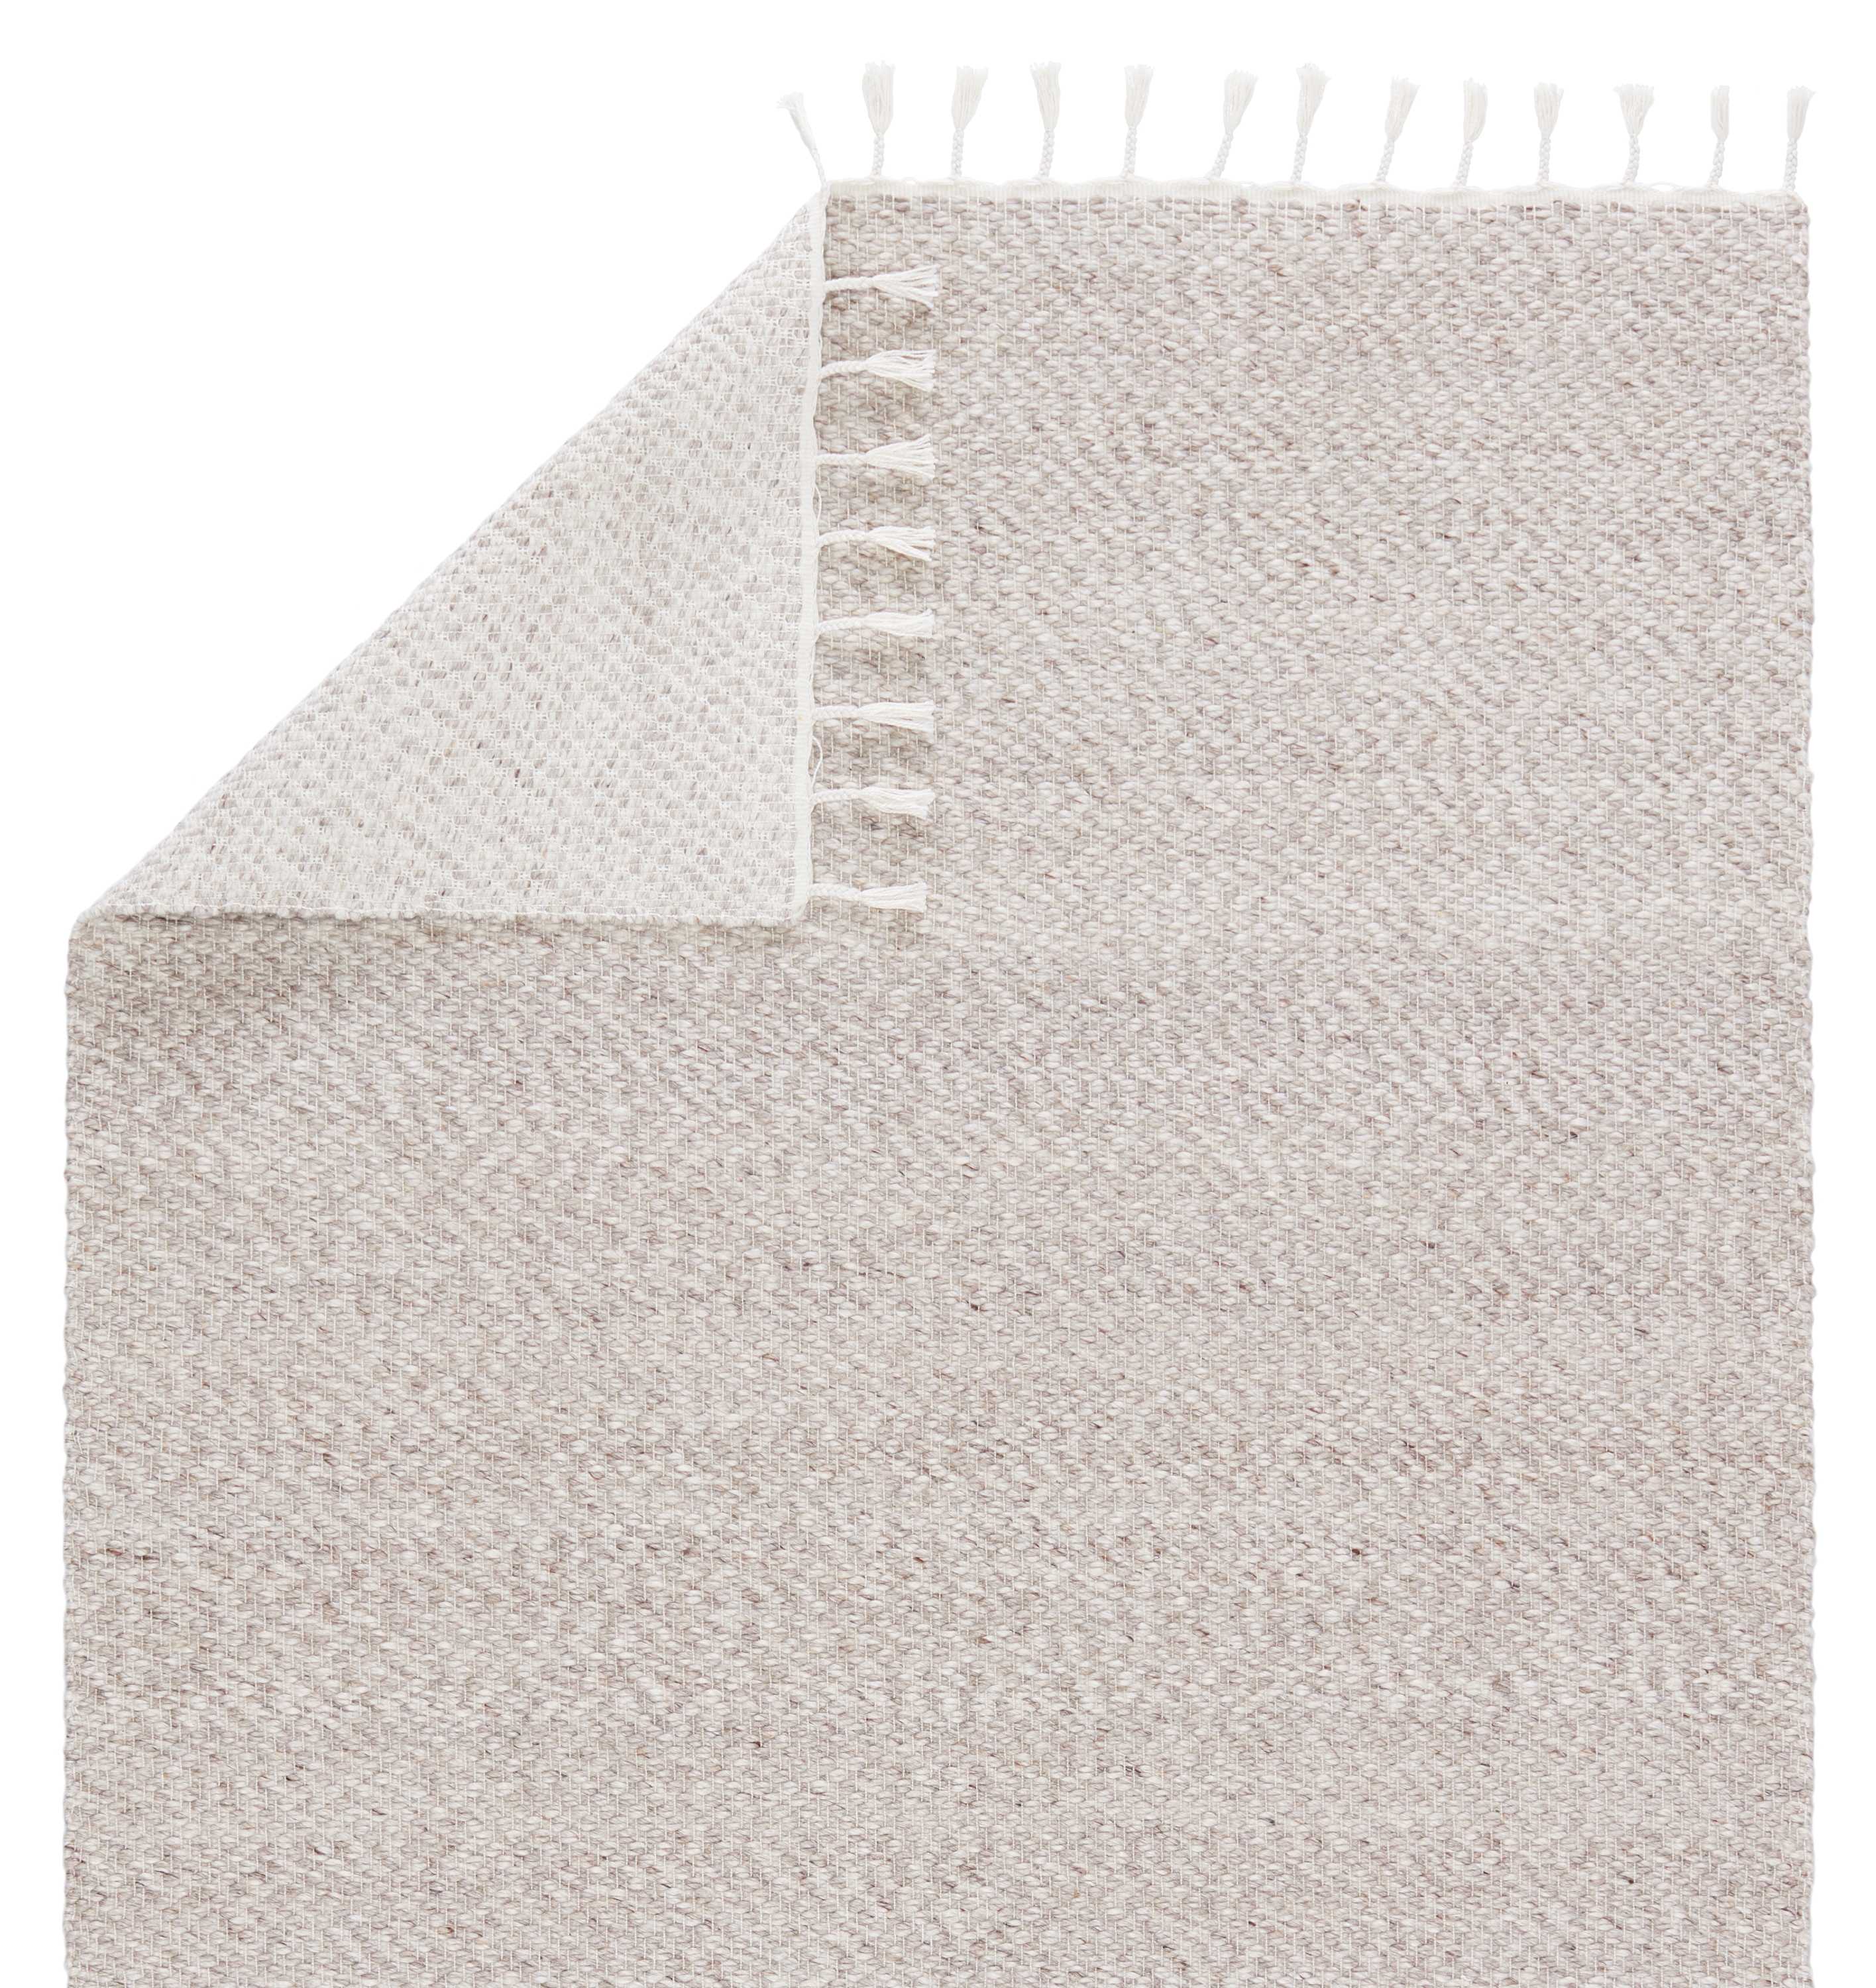 Adria Indoor/ Outdoor Solid Cream/ Gray Area Rug (8'X10') - Image 2